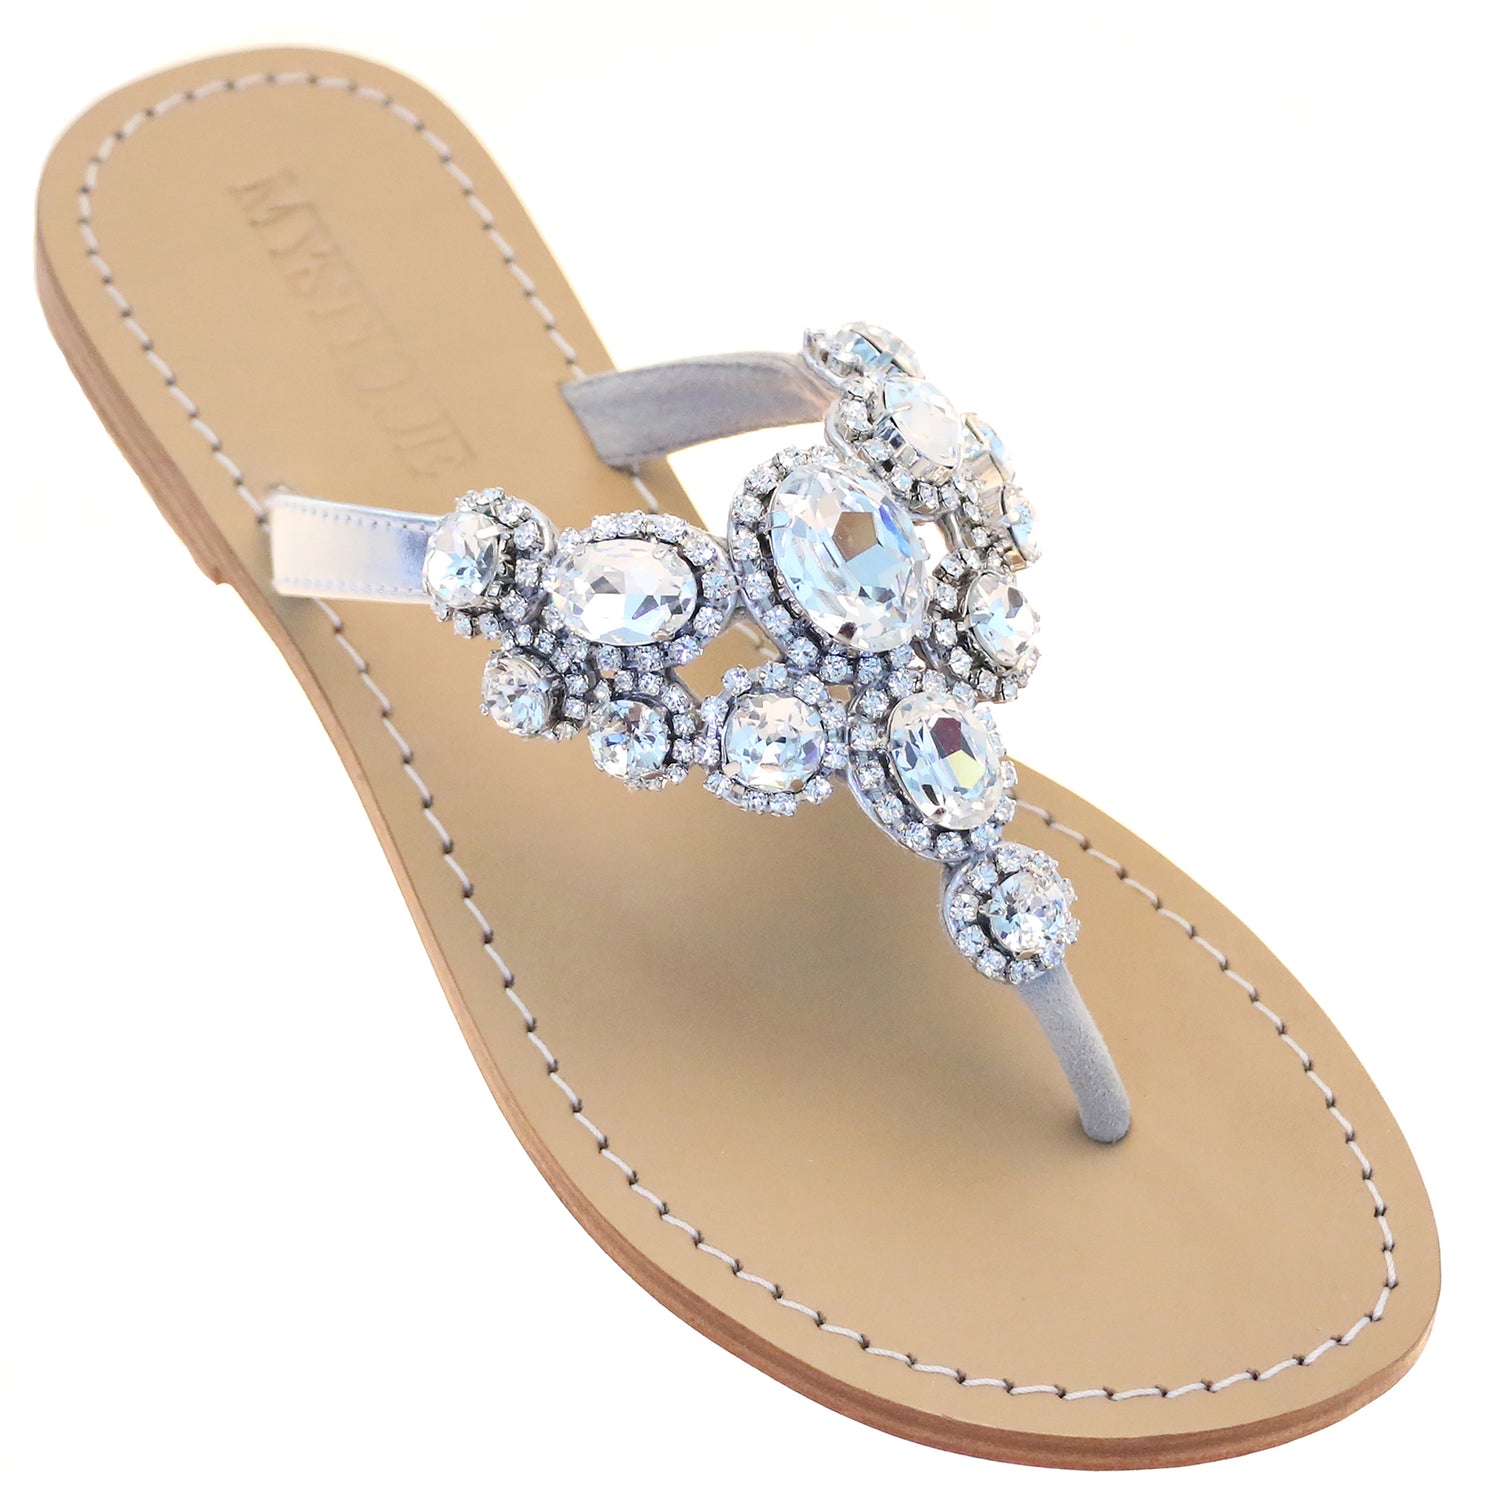 Positano - Women's Silver Jeweled Bridal Sandals | Mystique Sandals